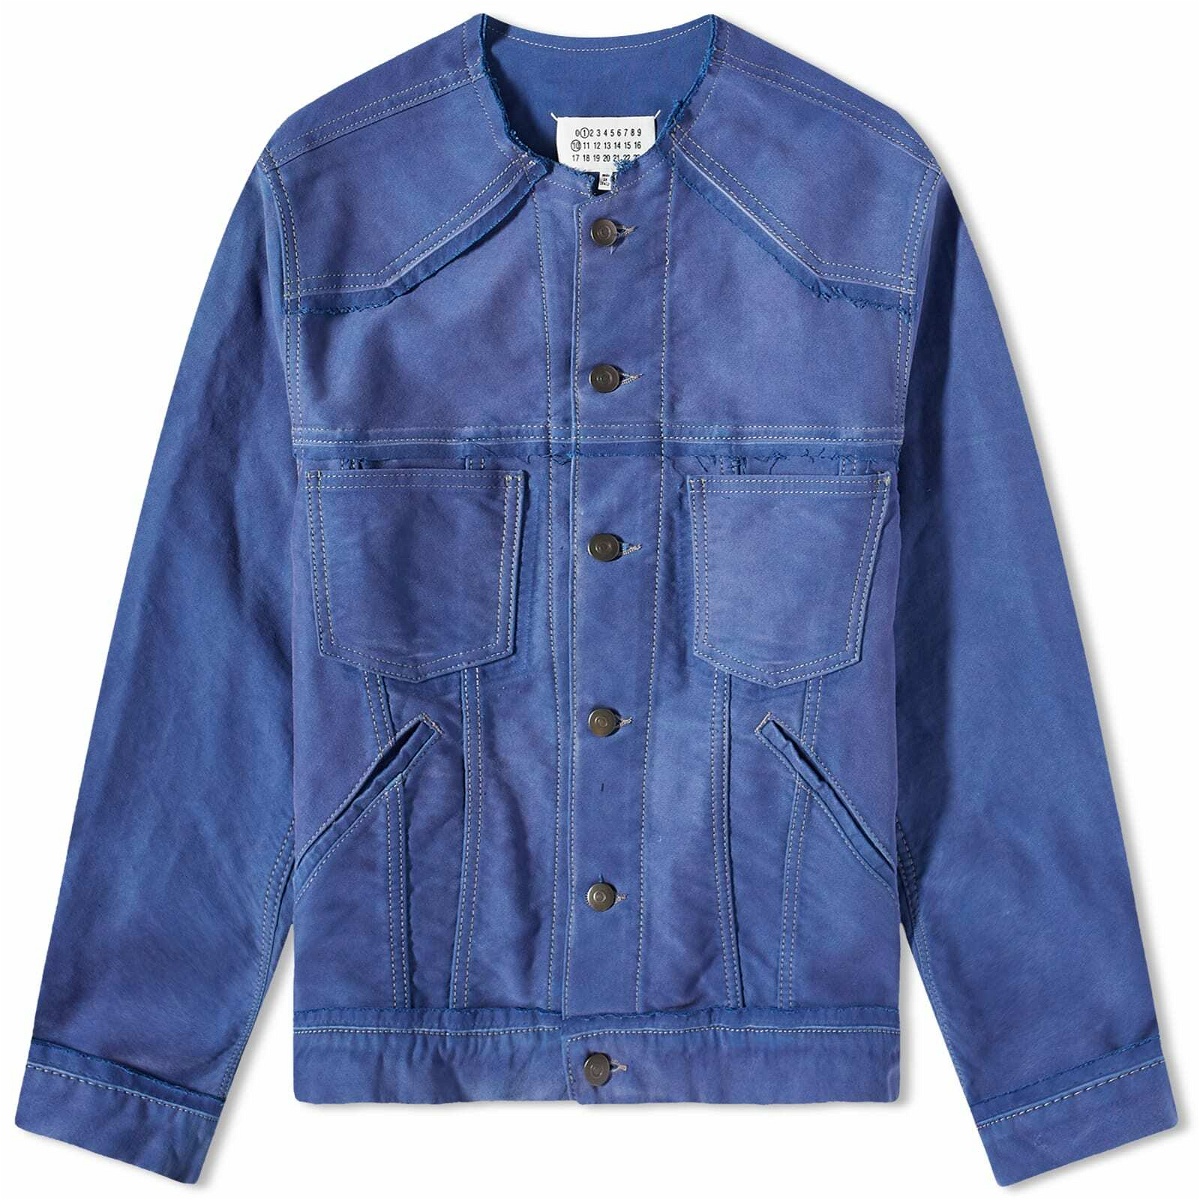 Maison Margiela Men's Colarless Denim Jacket in Cobalt Blue Maison Margiela